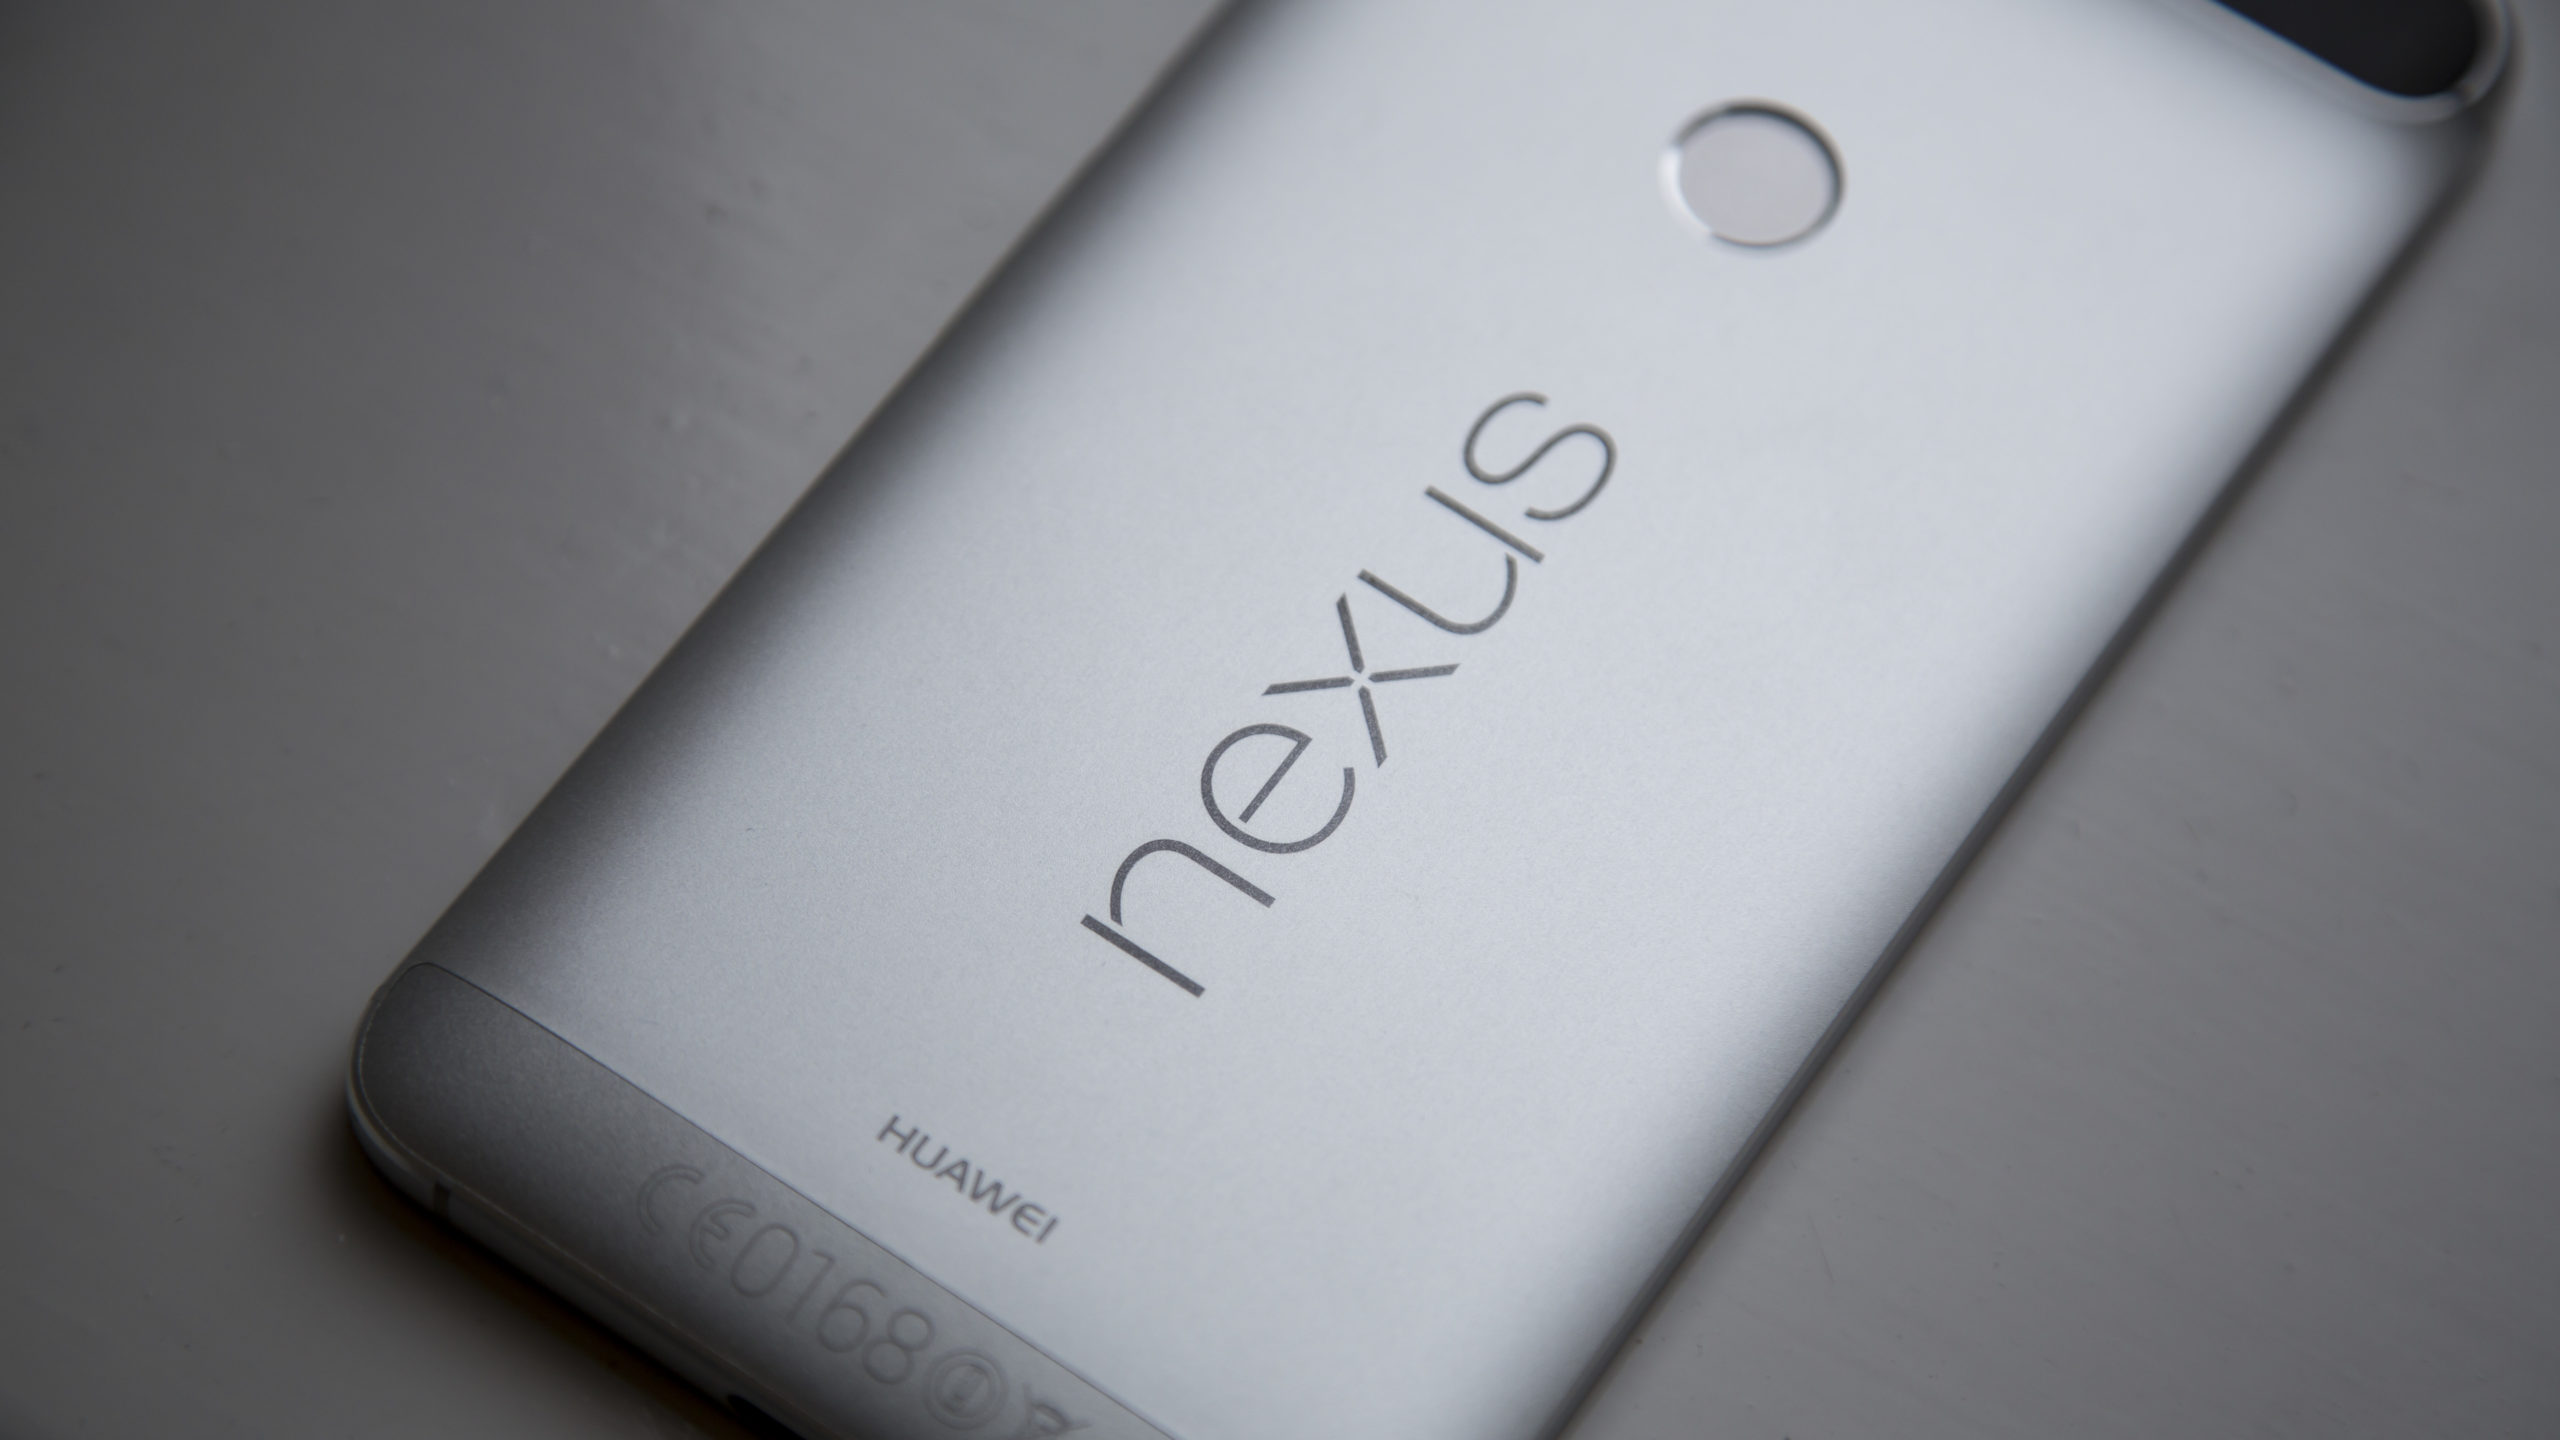 scherp auteur Reserve Google Nexus 6P review: Not worth tracking down in 2018